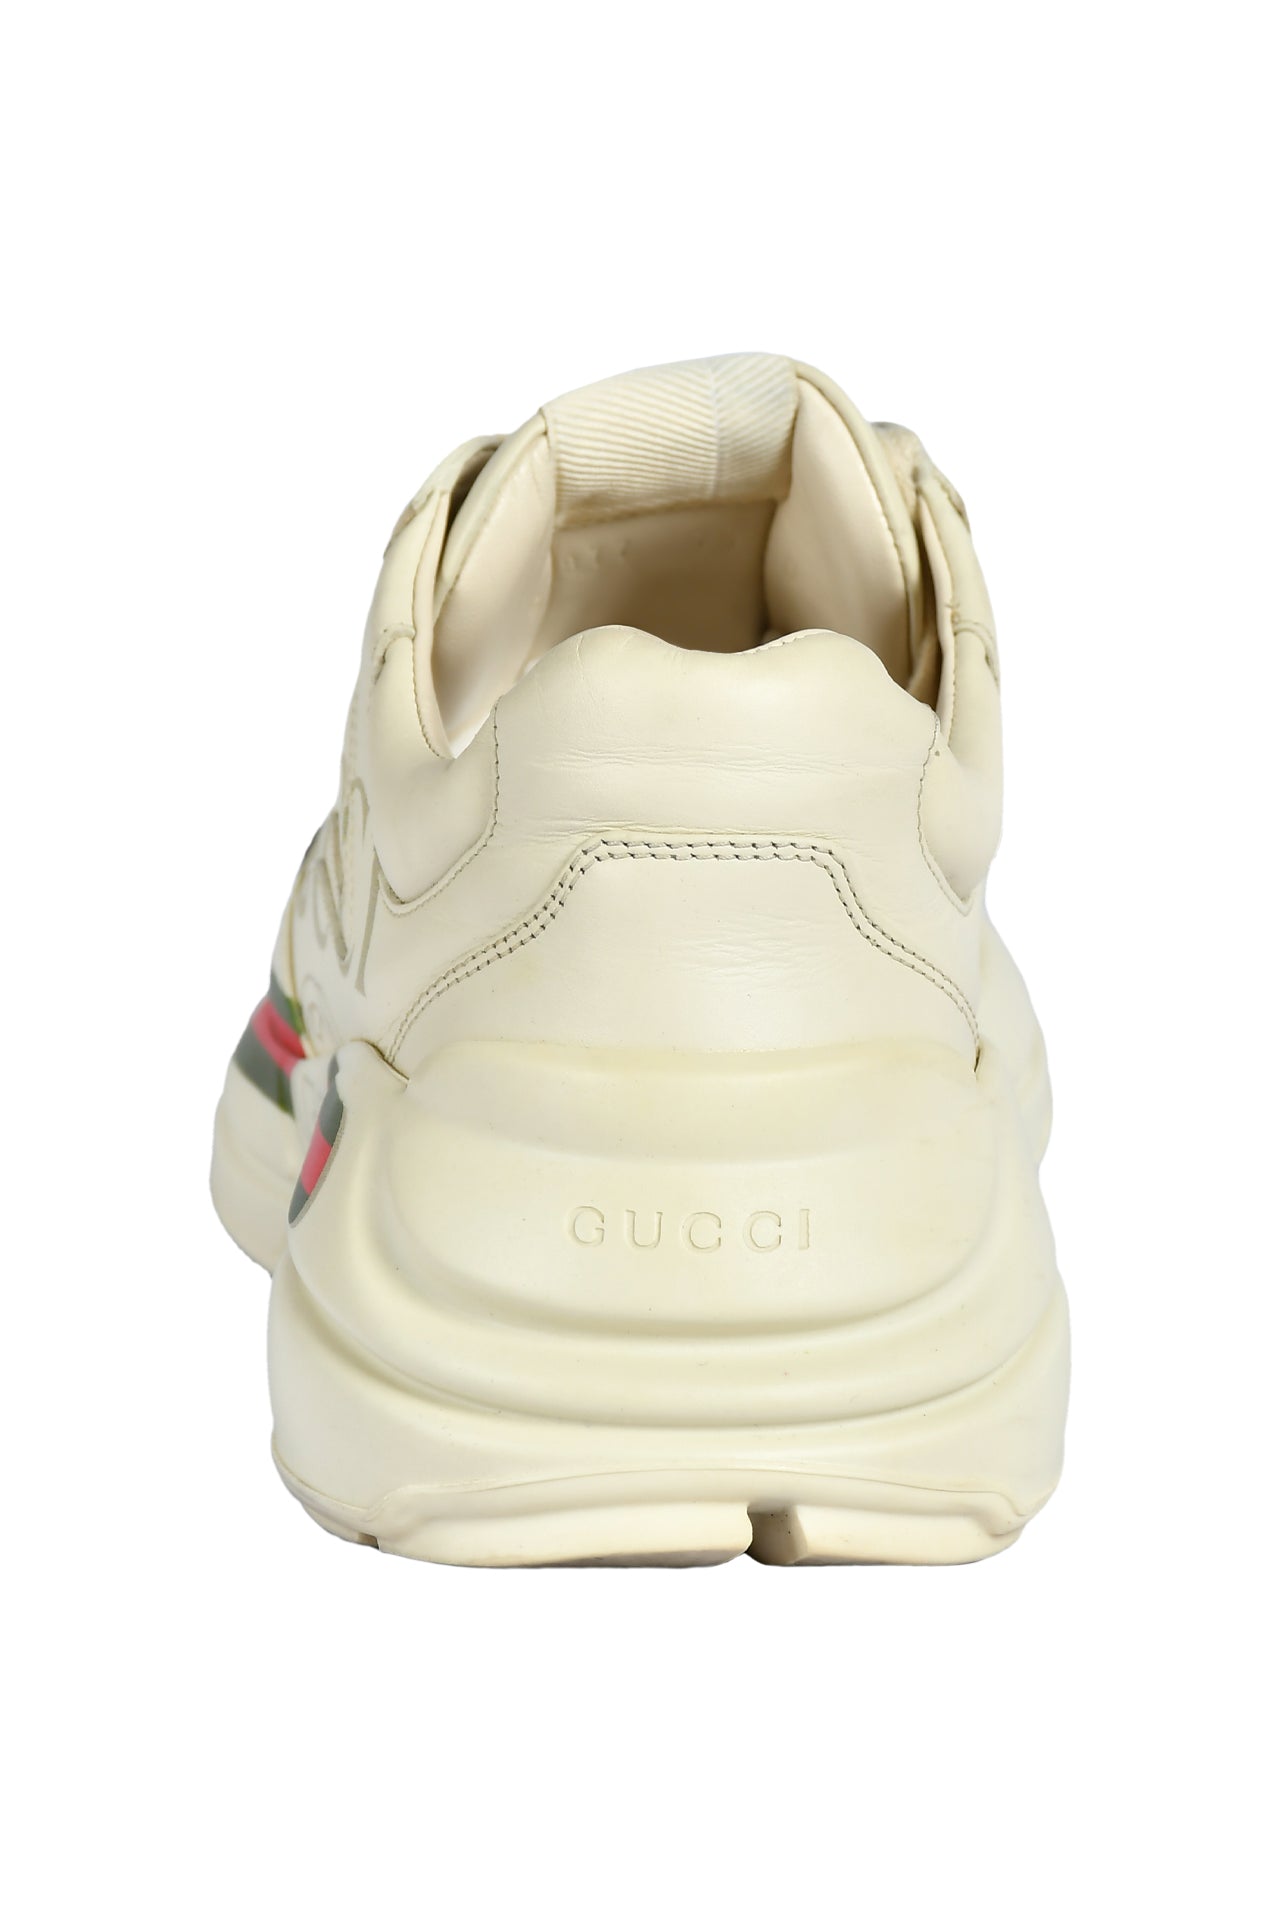 Gucci Calfskin Printed Rhyton Sneakers US 7.5